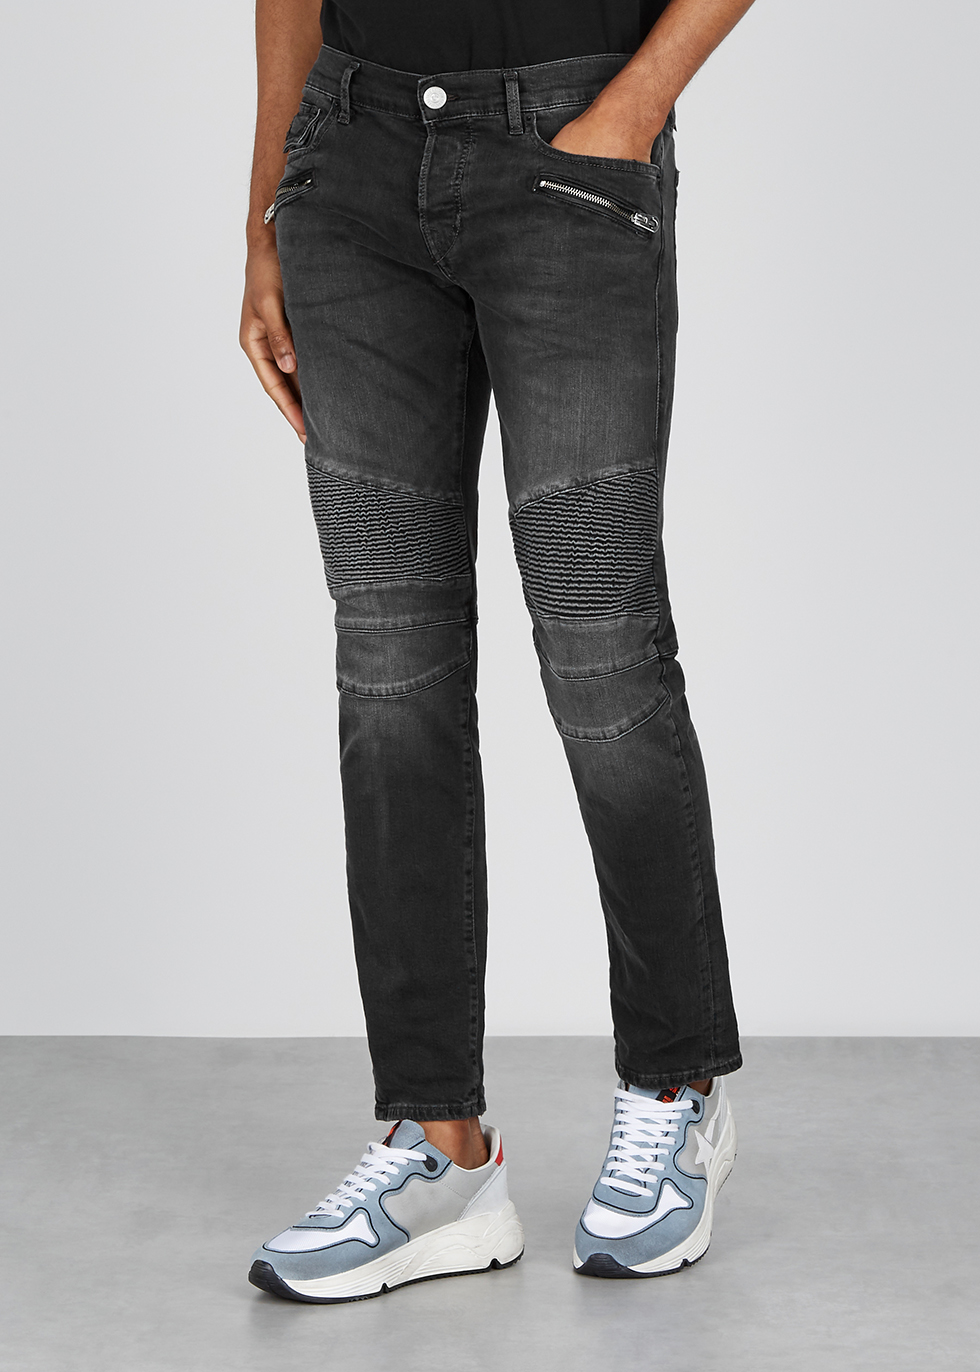 skinny true religion jeans